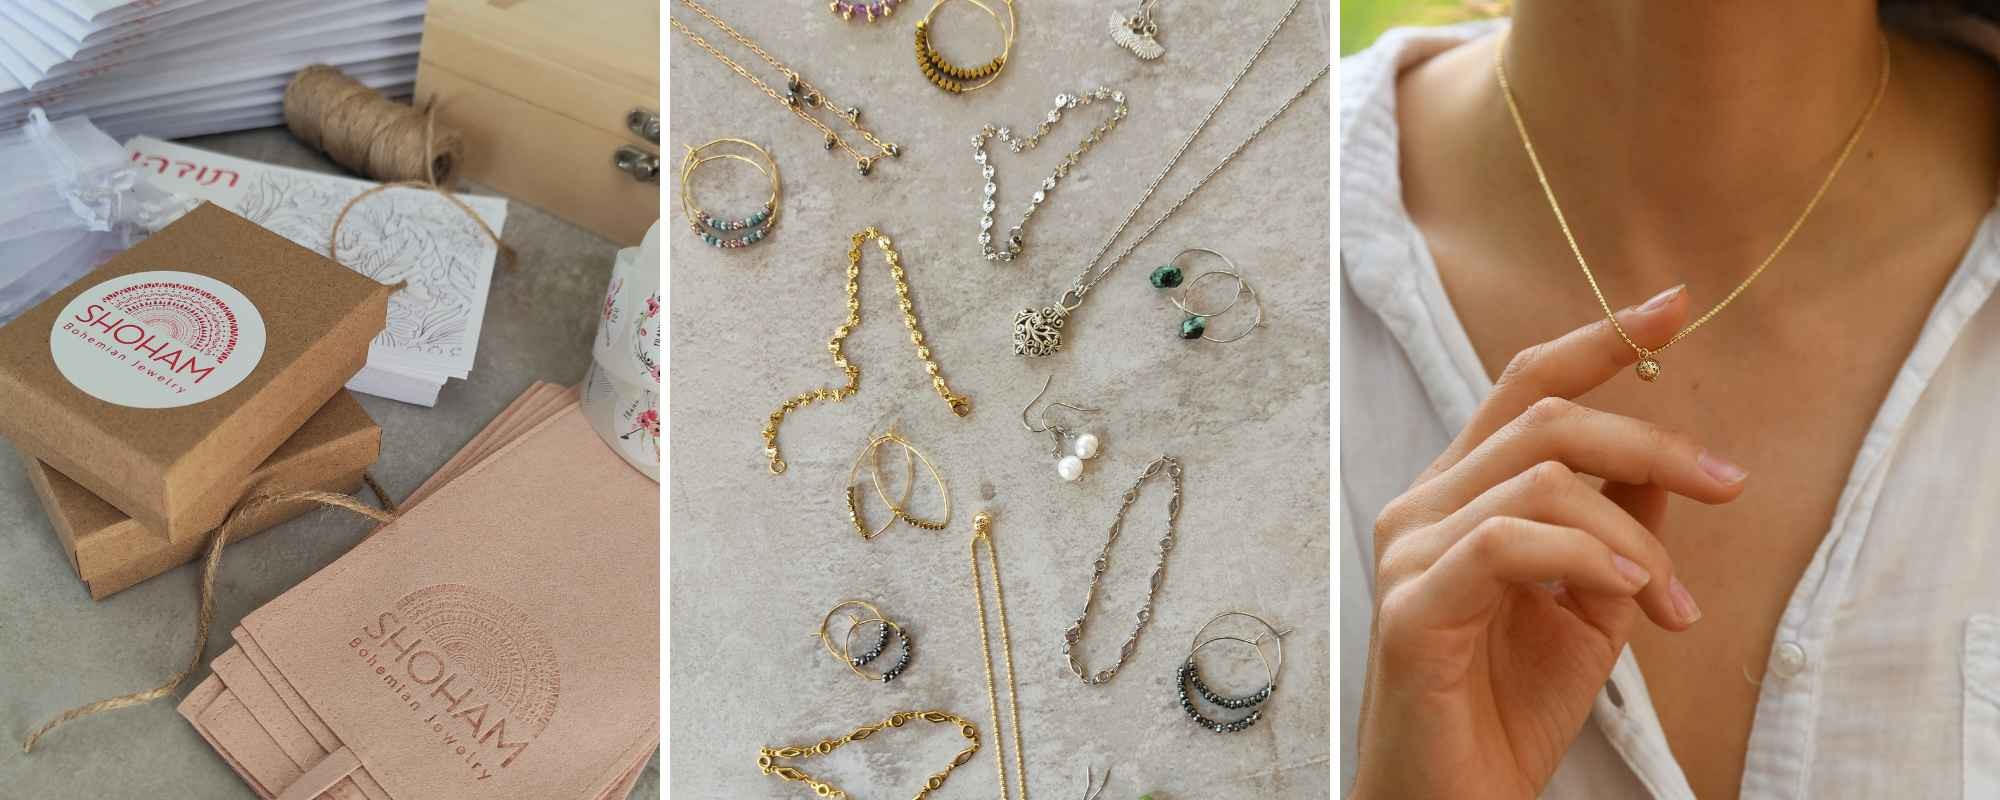 jewelry gifts - shoham bohemian jewelry